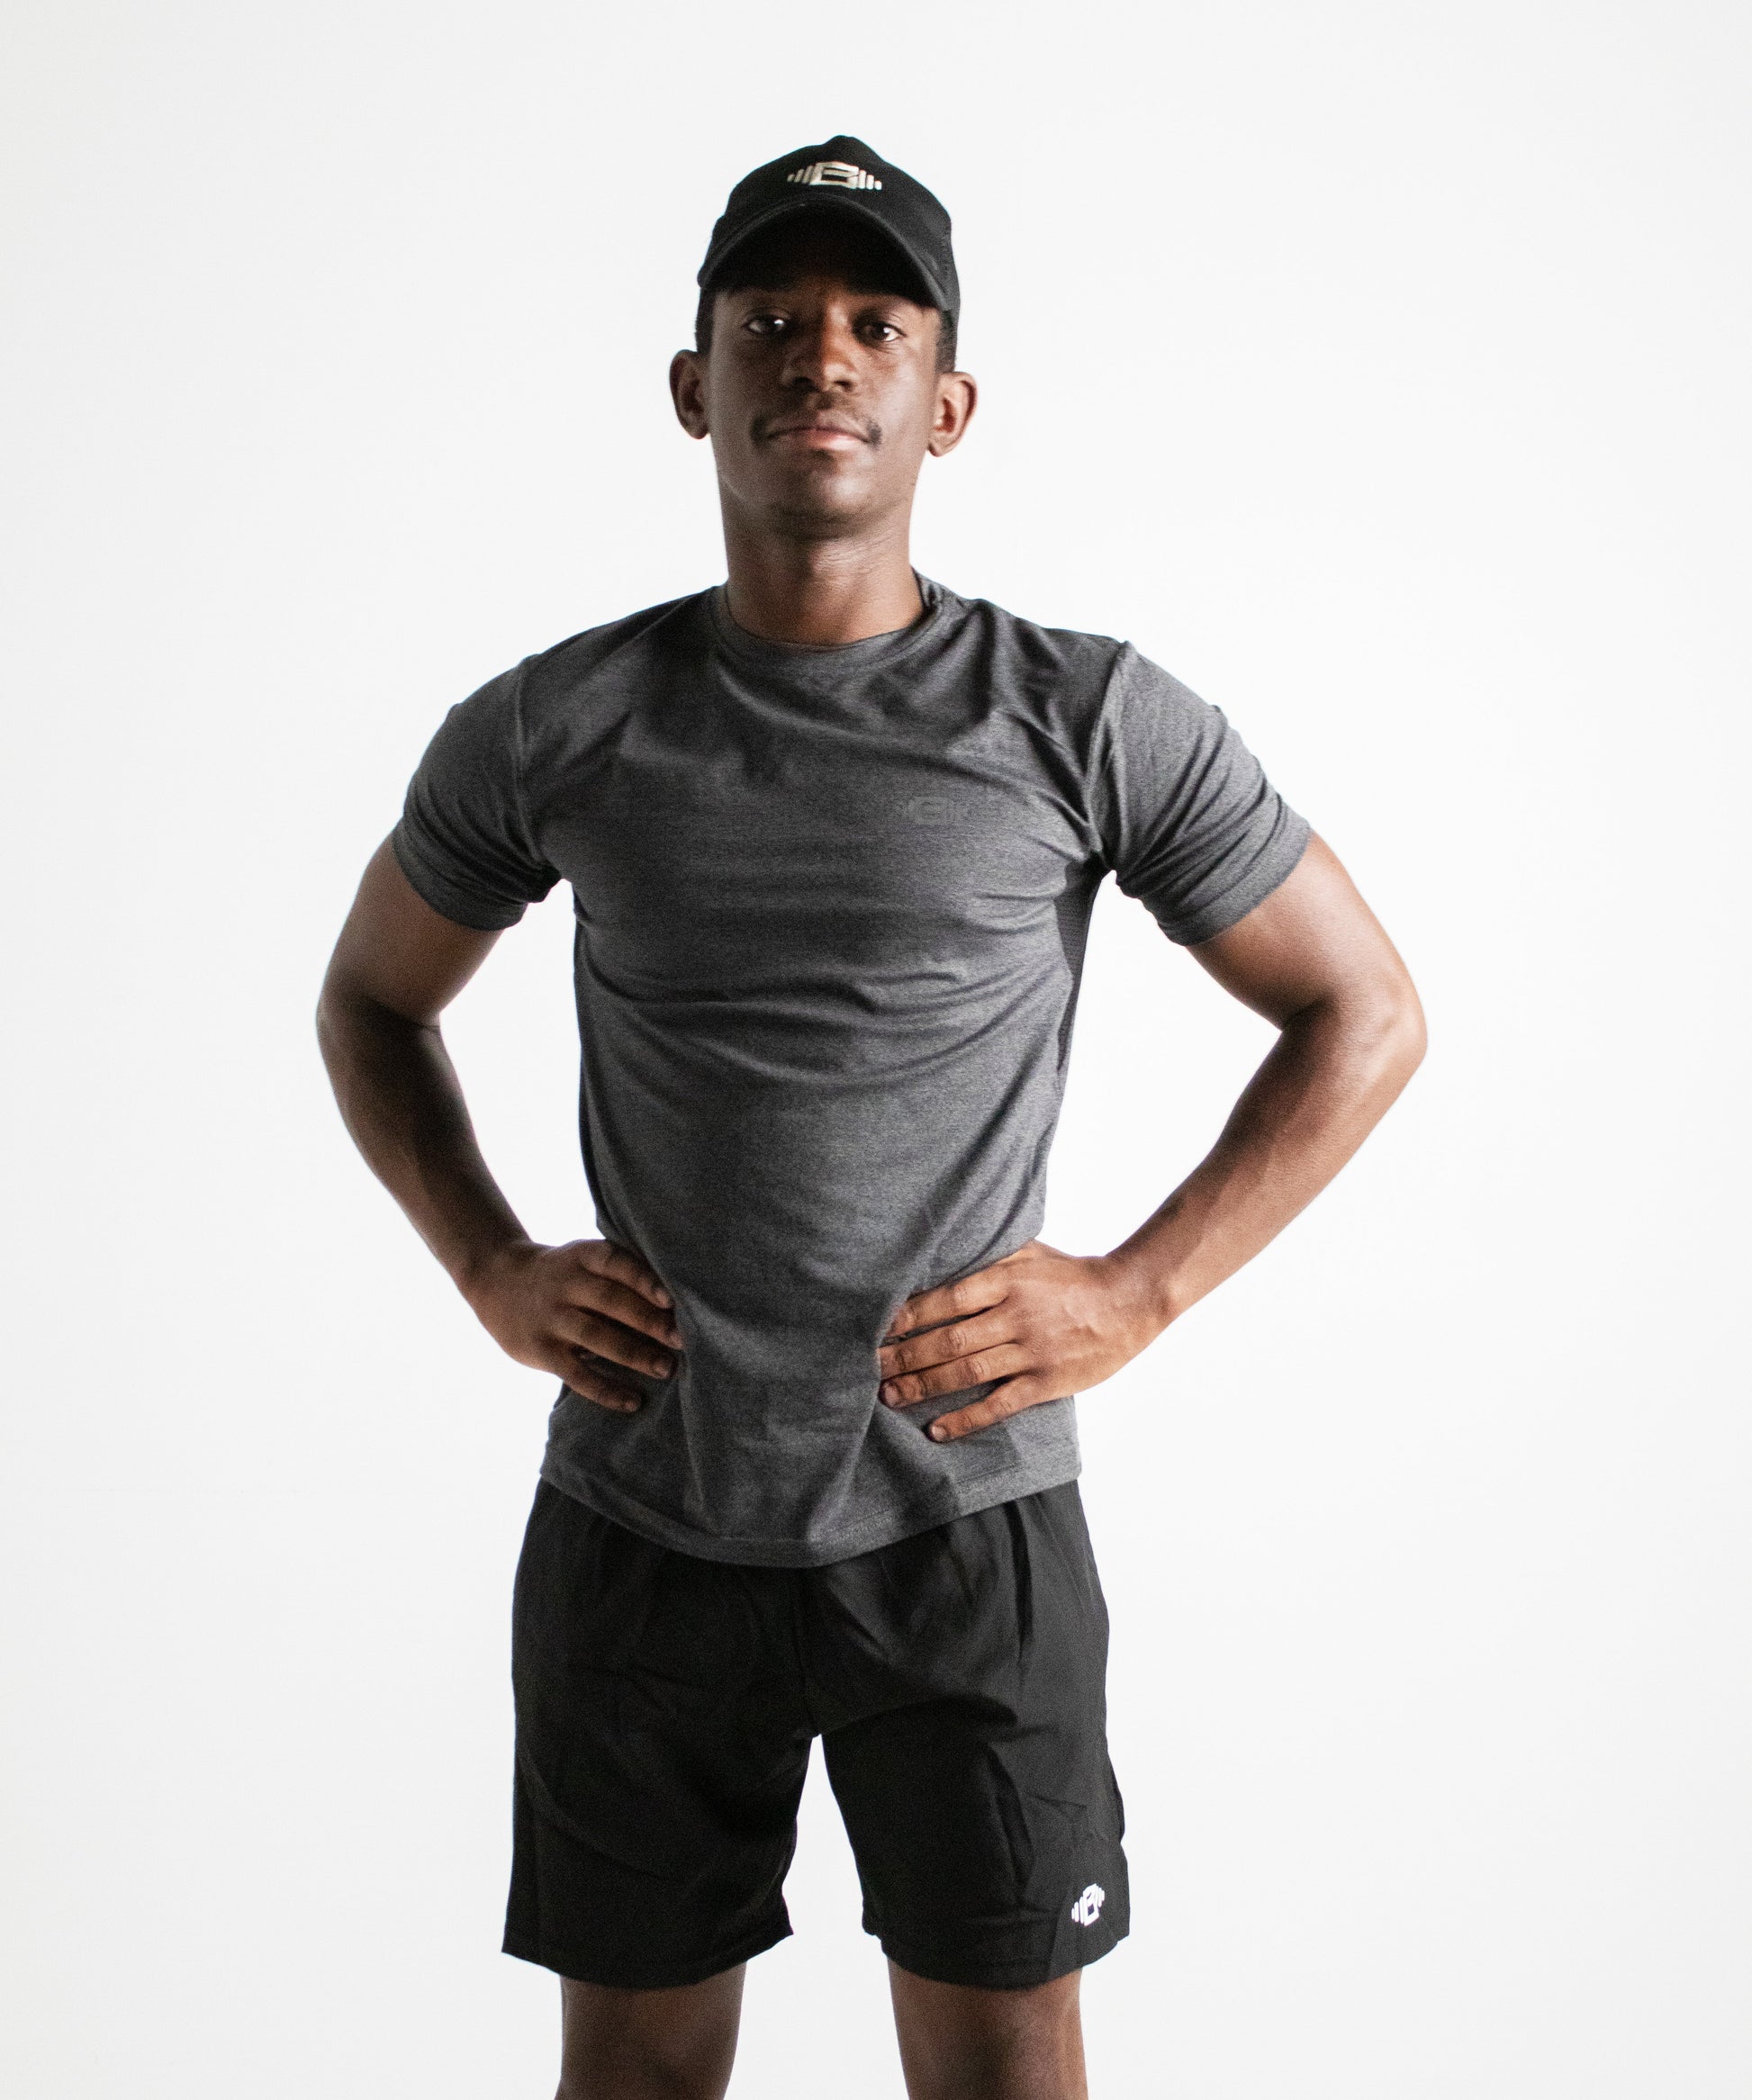 Optimum Performance T-Shirt - Charcoal Black - Premium  from Buzz Physique - Just $18.95! Shop now at Buzz Physique